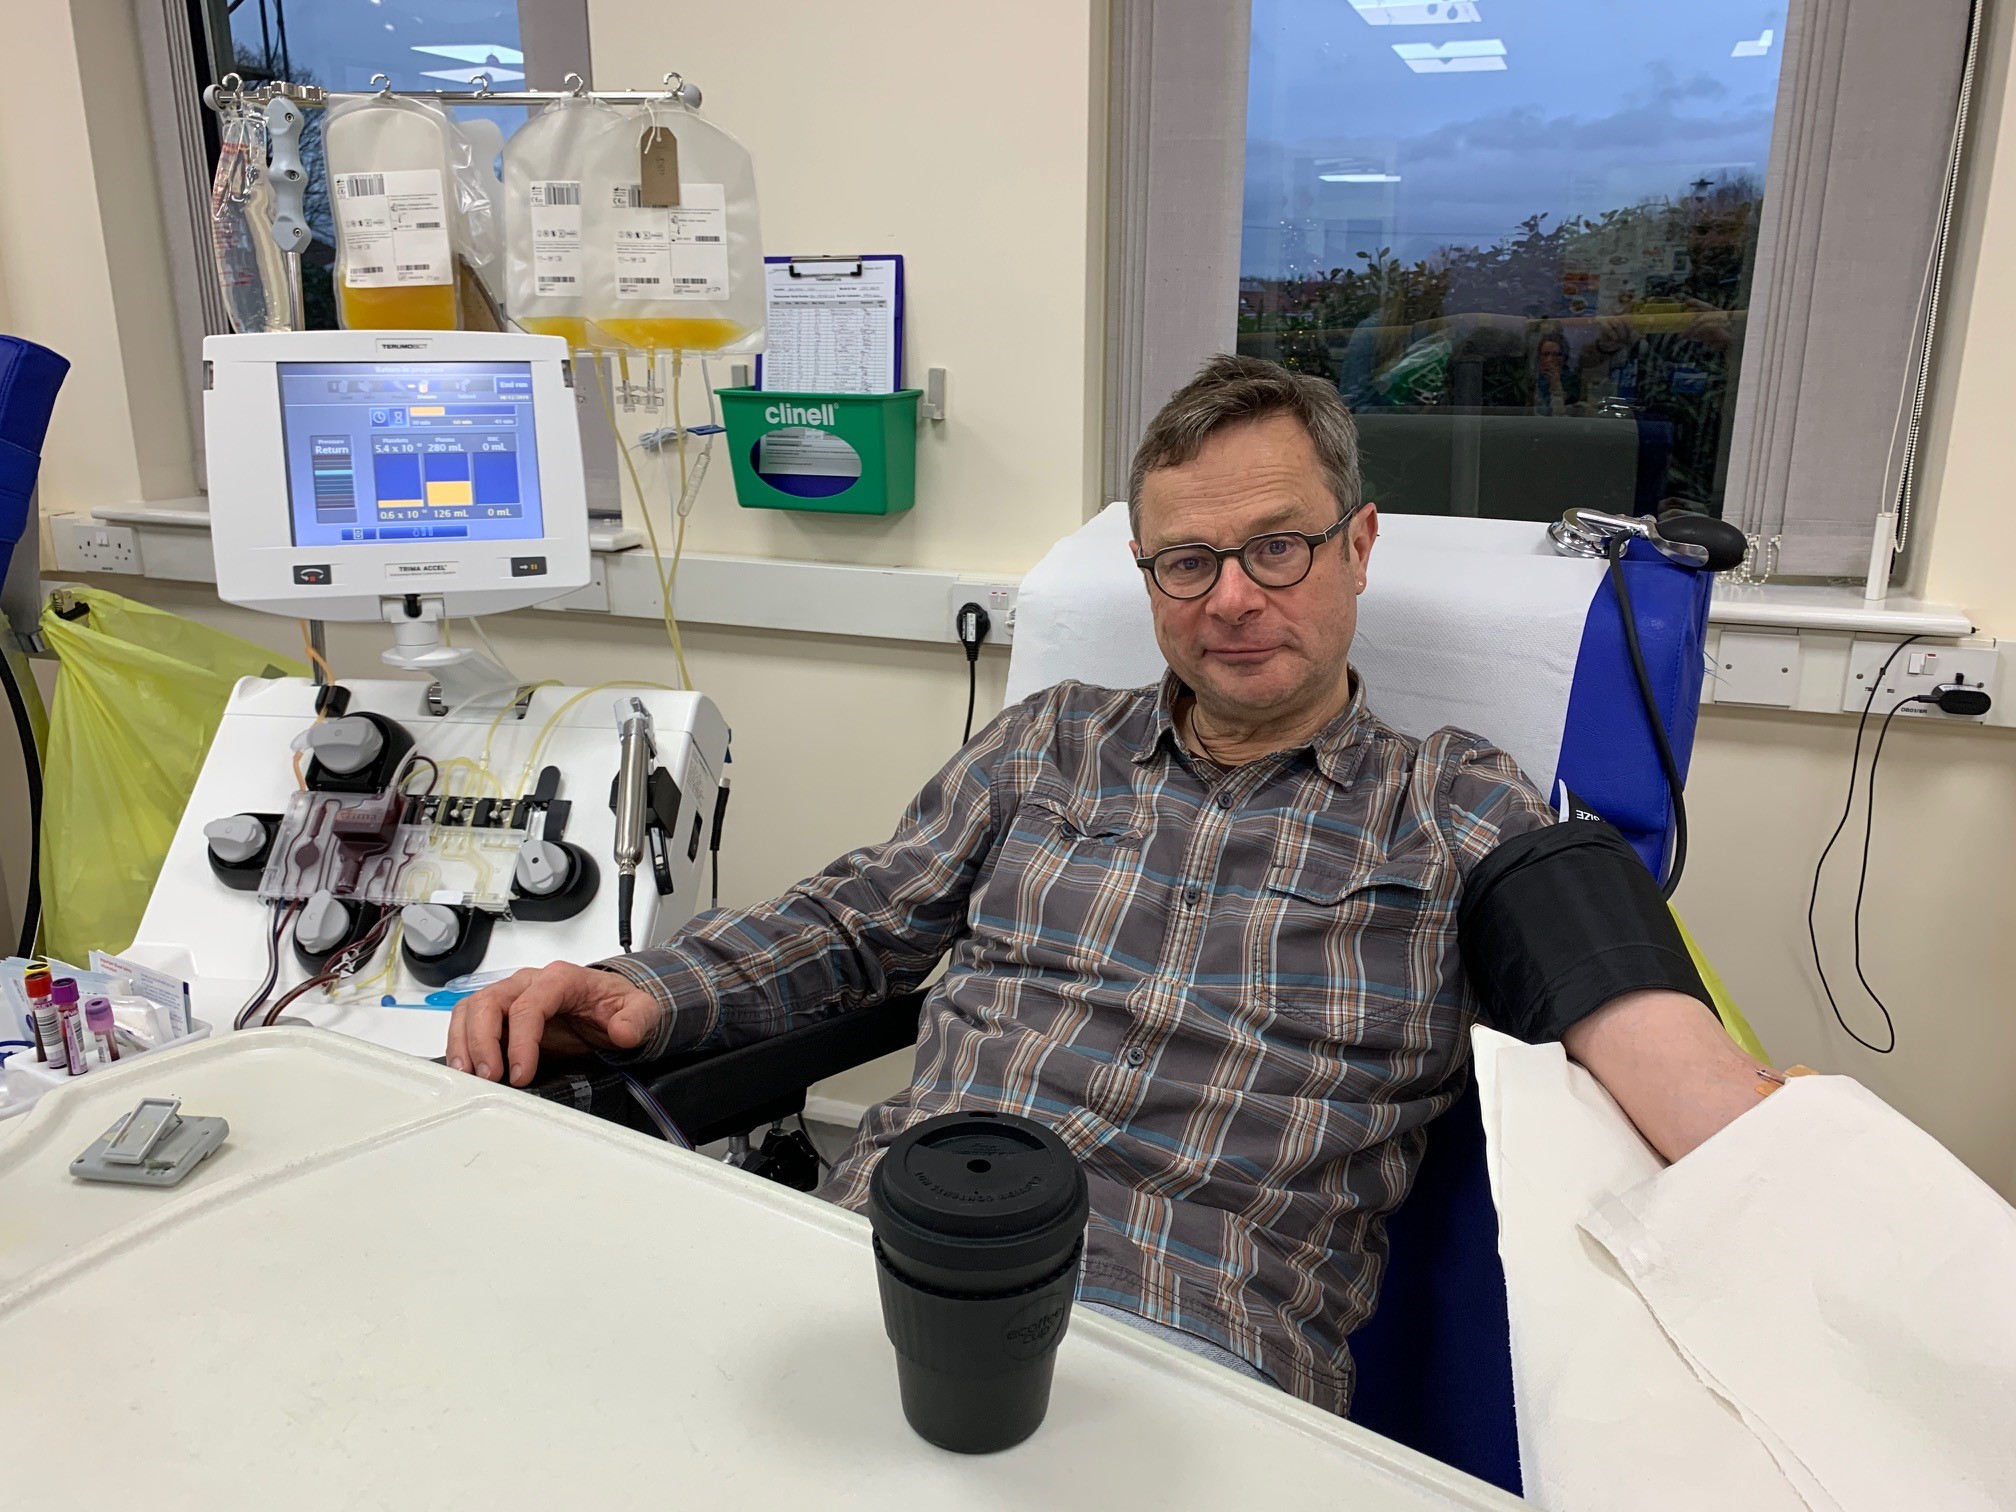 Hugh Fearnley-Whittingstall donating platelets